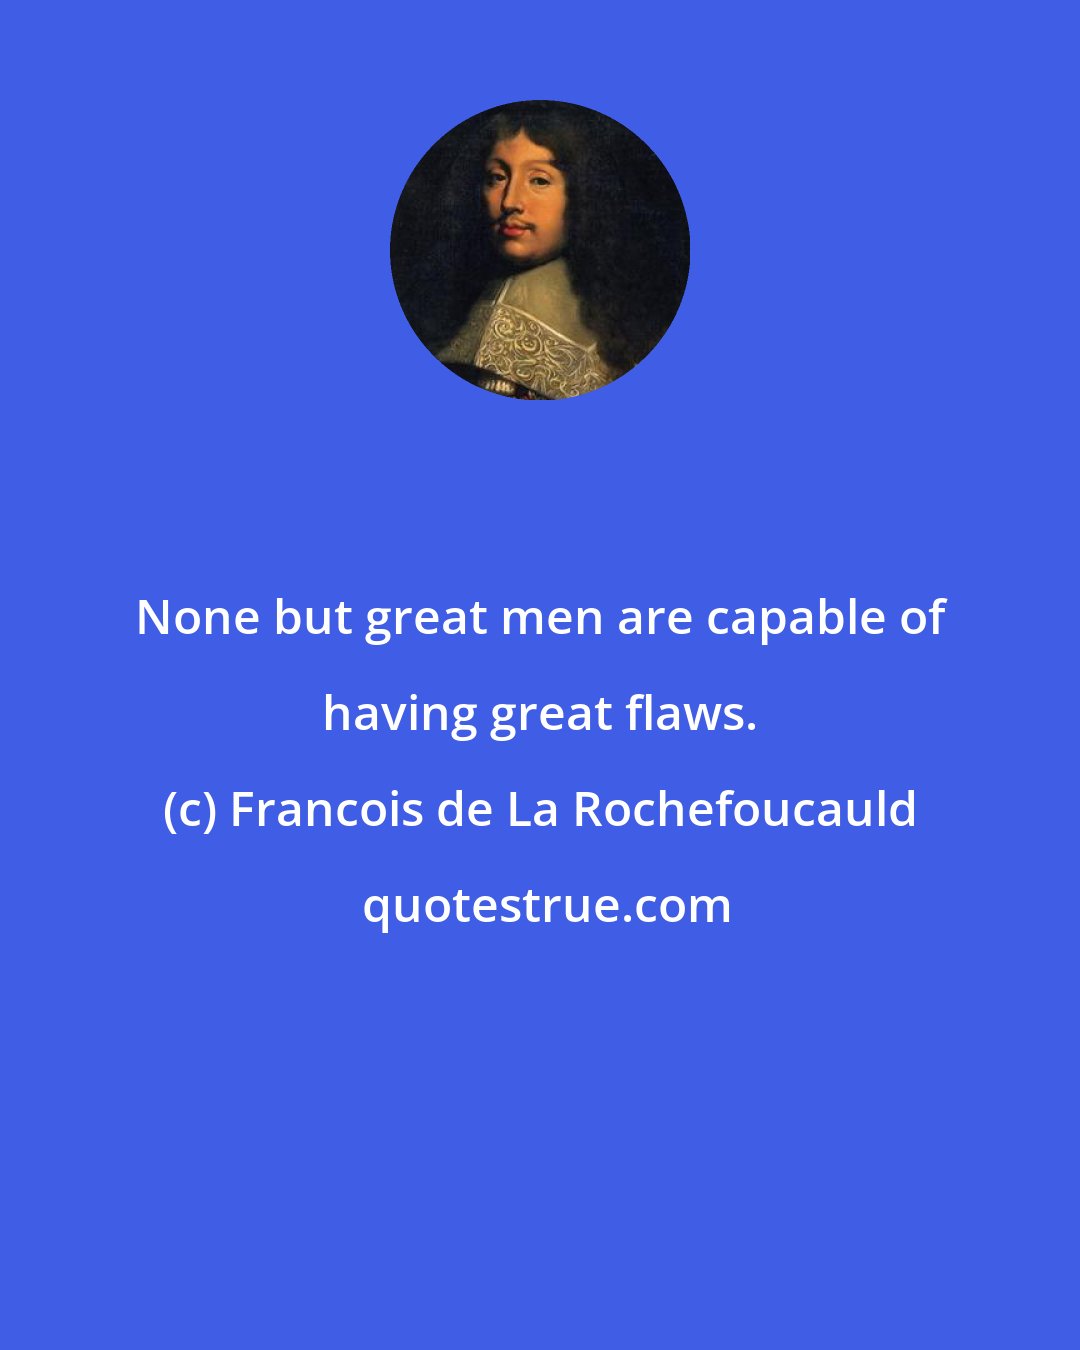 Francois de La Rochefoucauld: None but great men are capable of having great flaws.